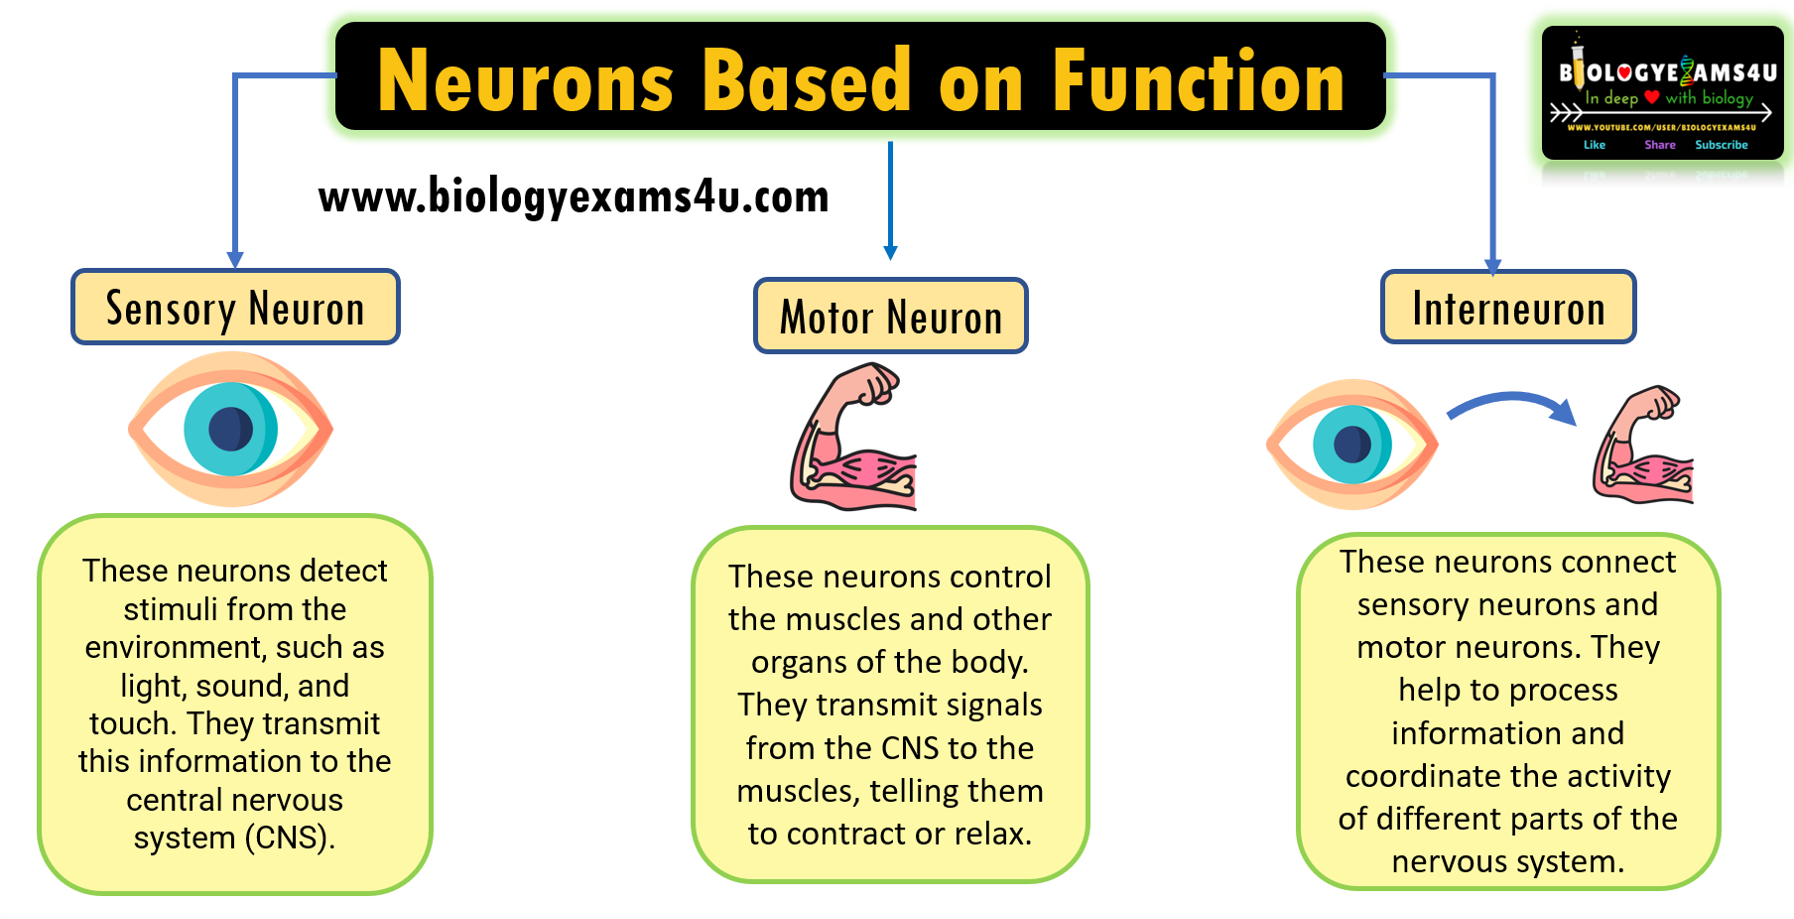 Neurons Classification based on Function  Sensory neuron, Motor neuron and Interneuron